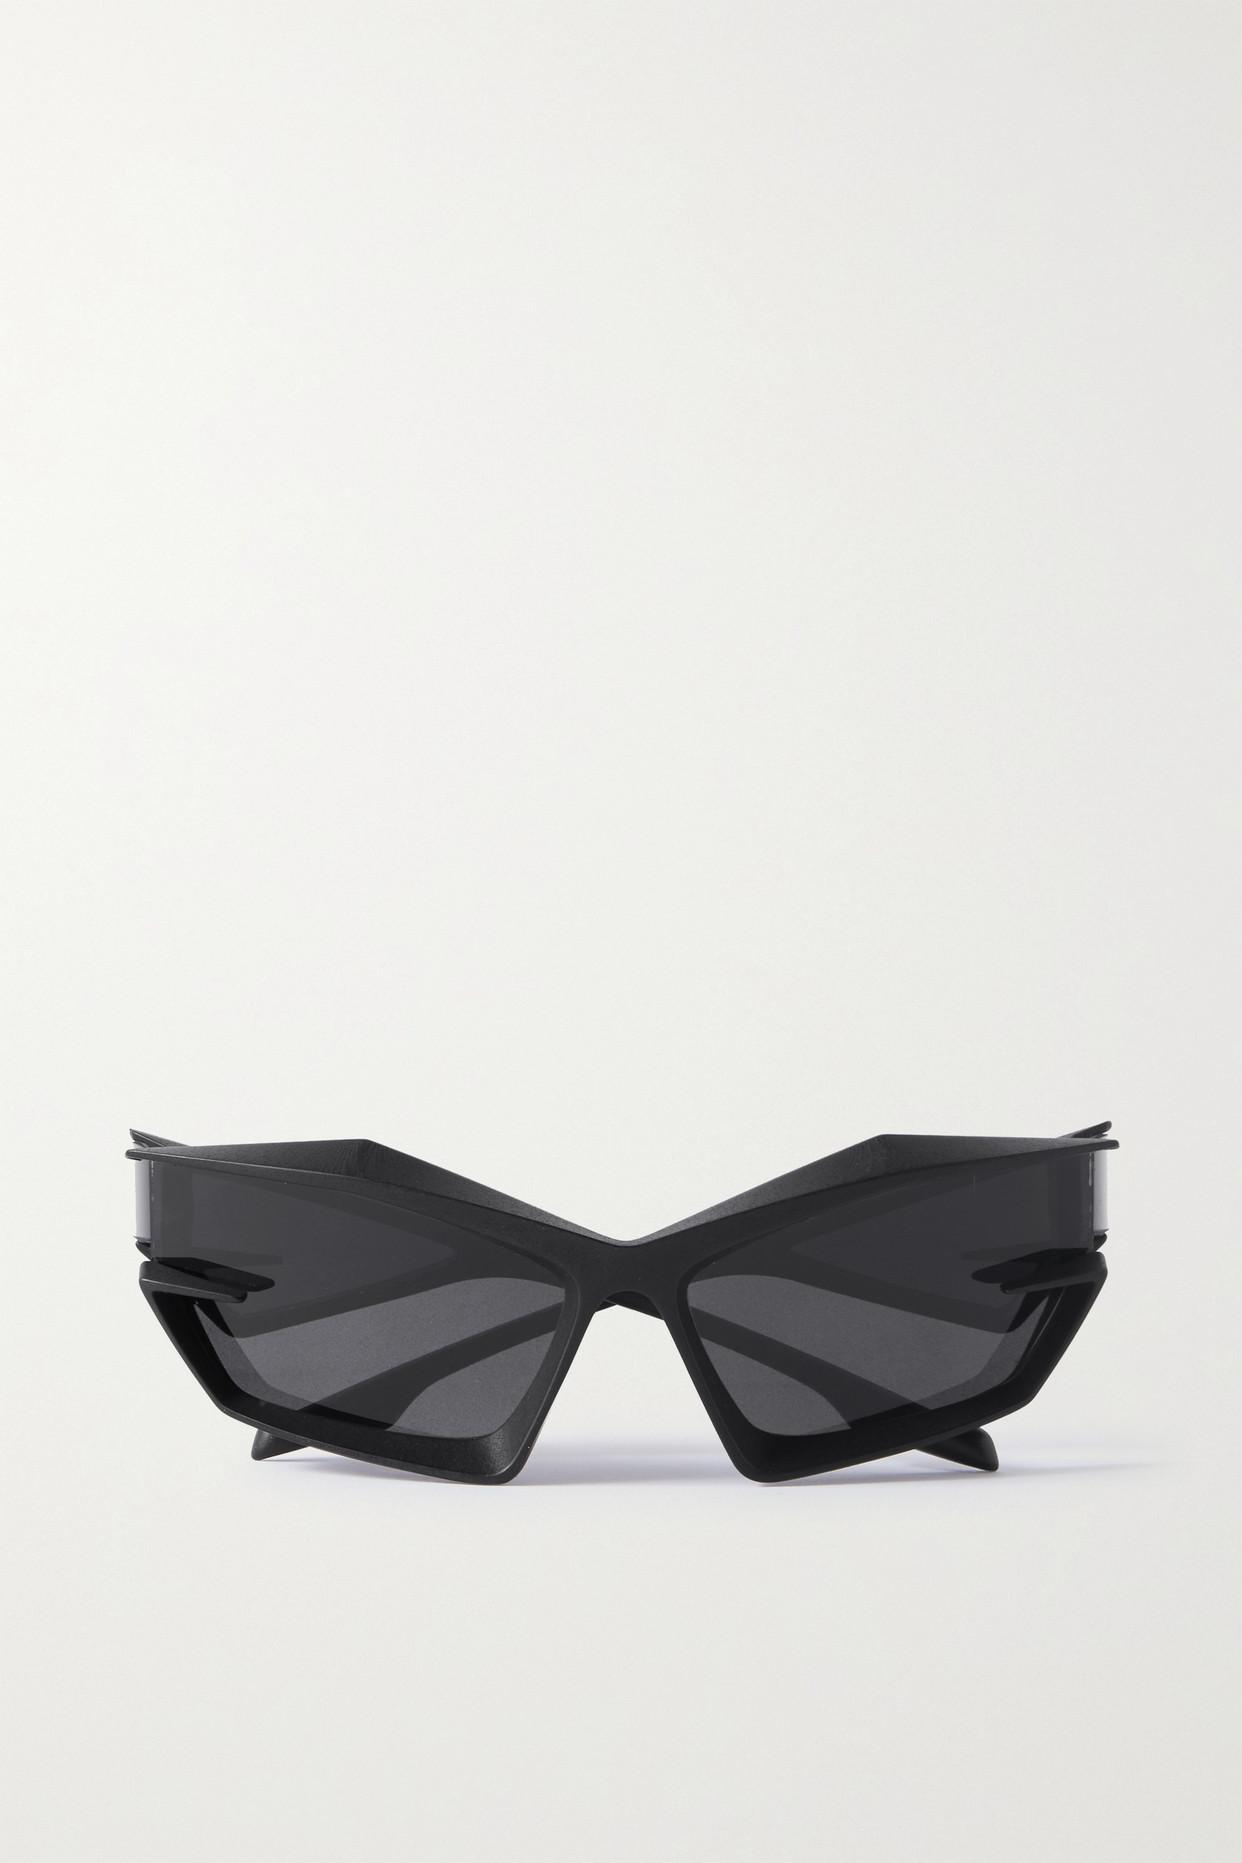 Givenchy Giv Cut Cat-eye Nylon Sunglasses in Black